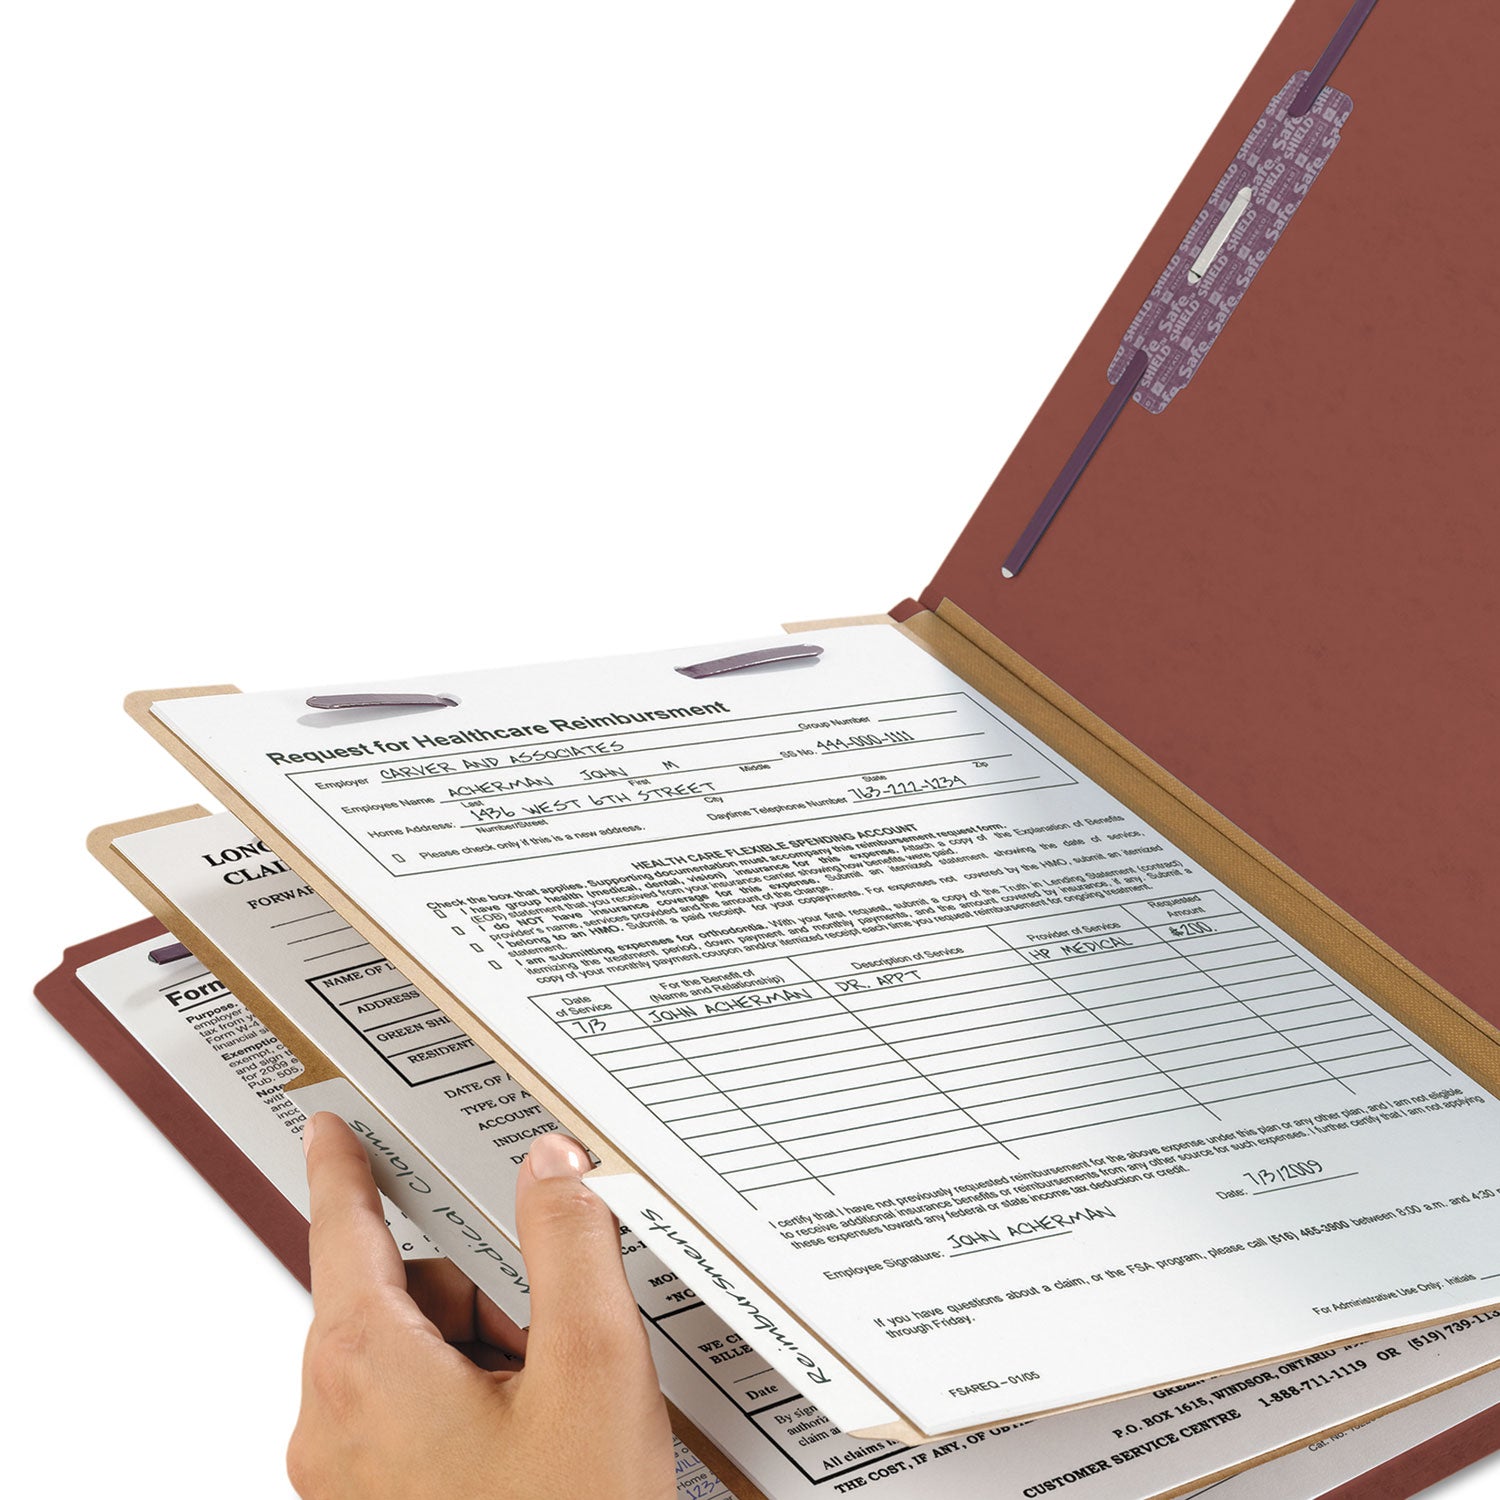 Pressboard Classification Folders, Six SafeSHIELD Fasteners, 1/3-Cut Tabs, 2 Dividers, Letter Size, Red, 10/Box - 